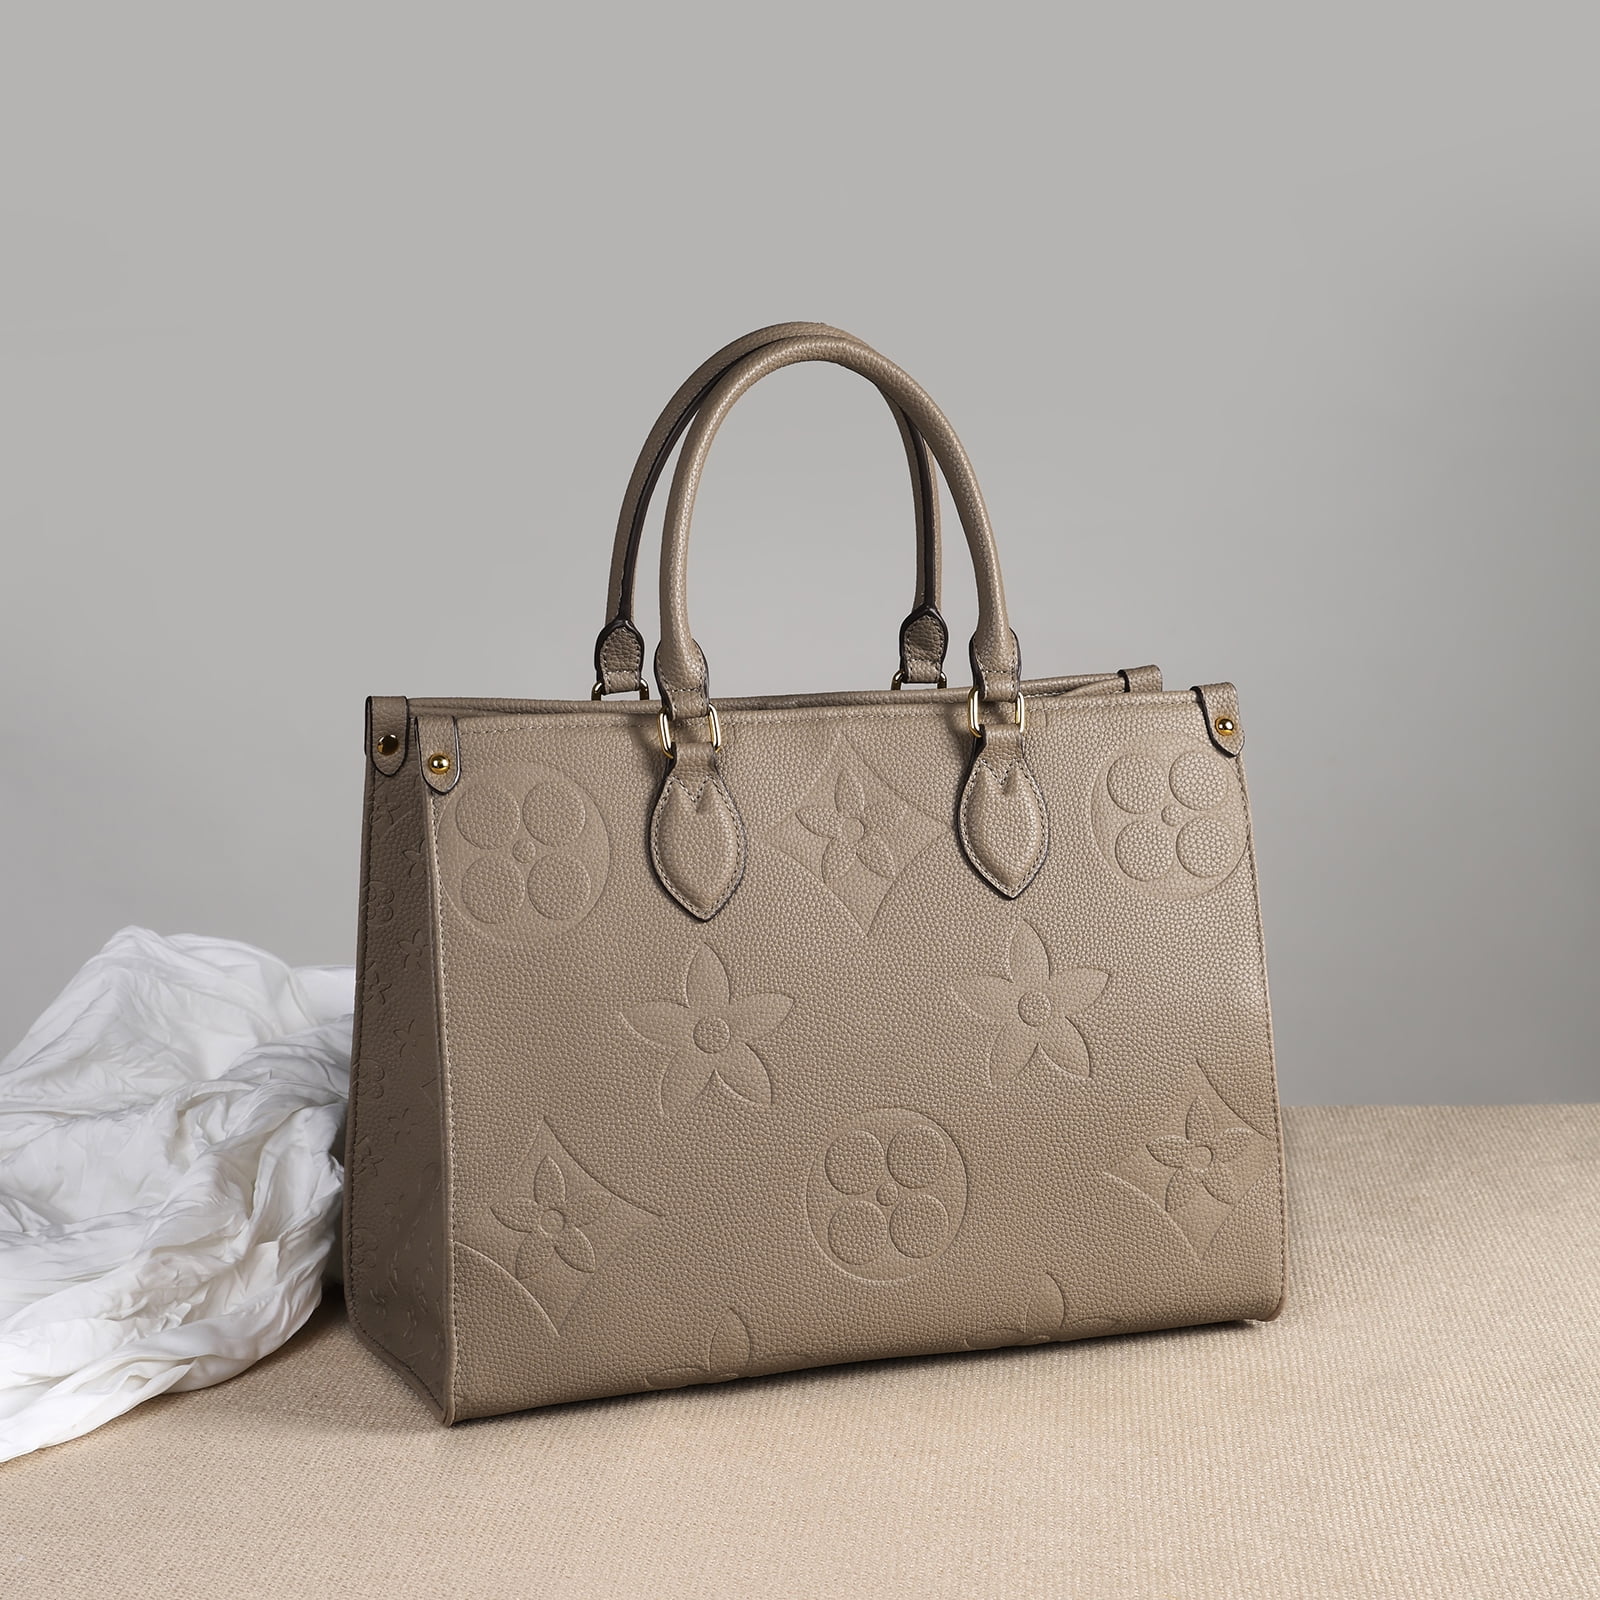 Top 5 LOUIS VUITTON Designer Bags for Moms